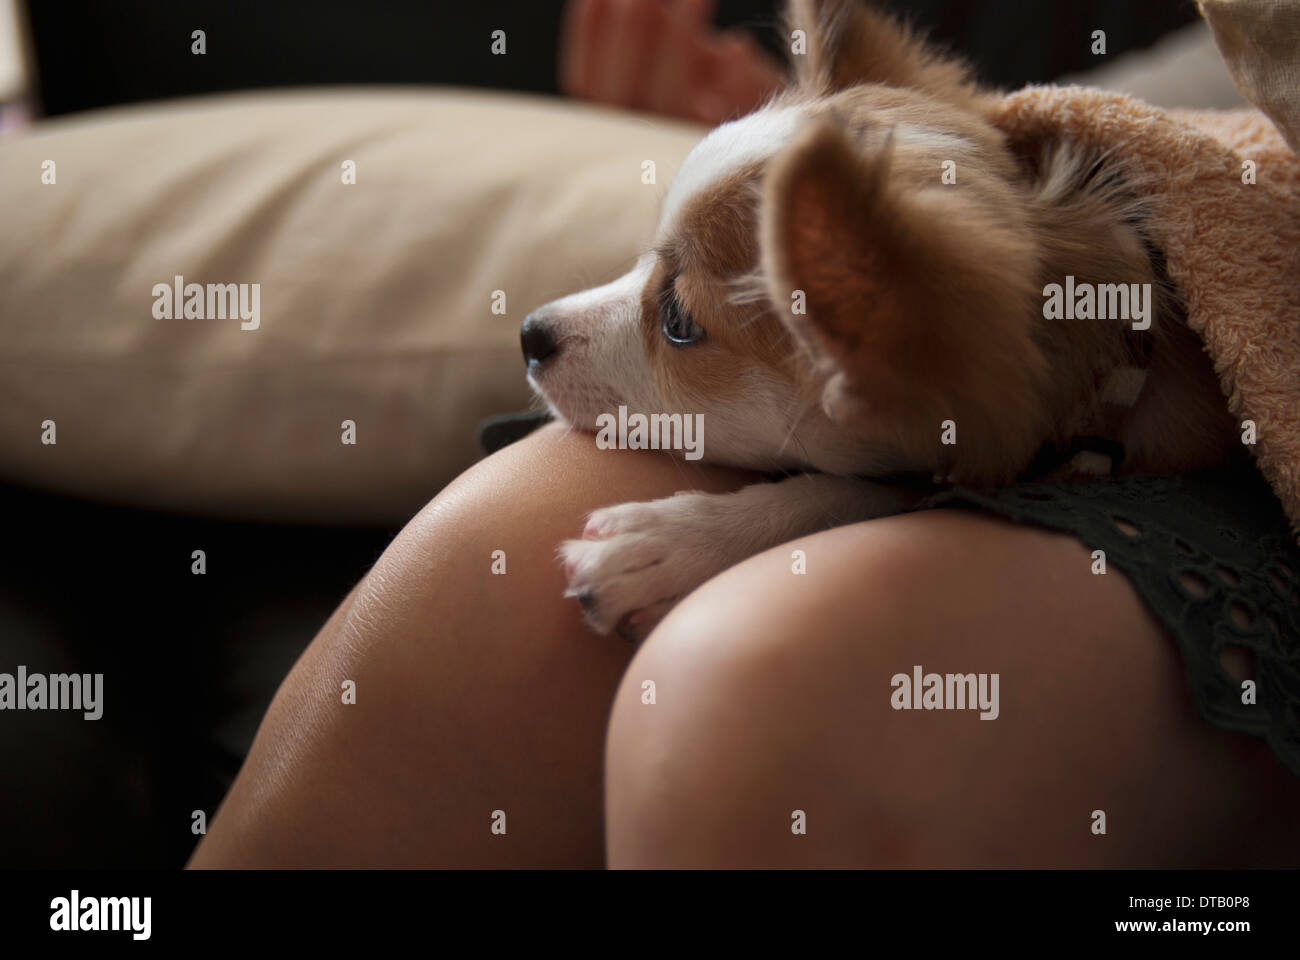 Dog lying on woman's lap, close-up Stock Photo